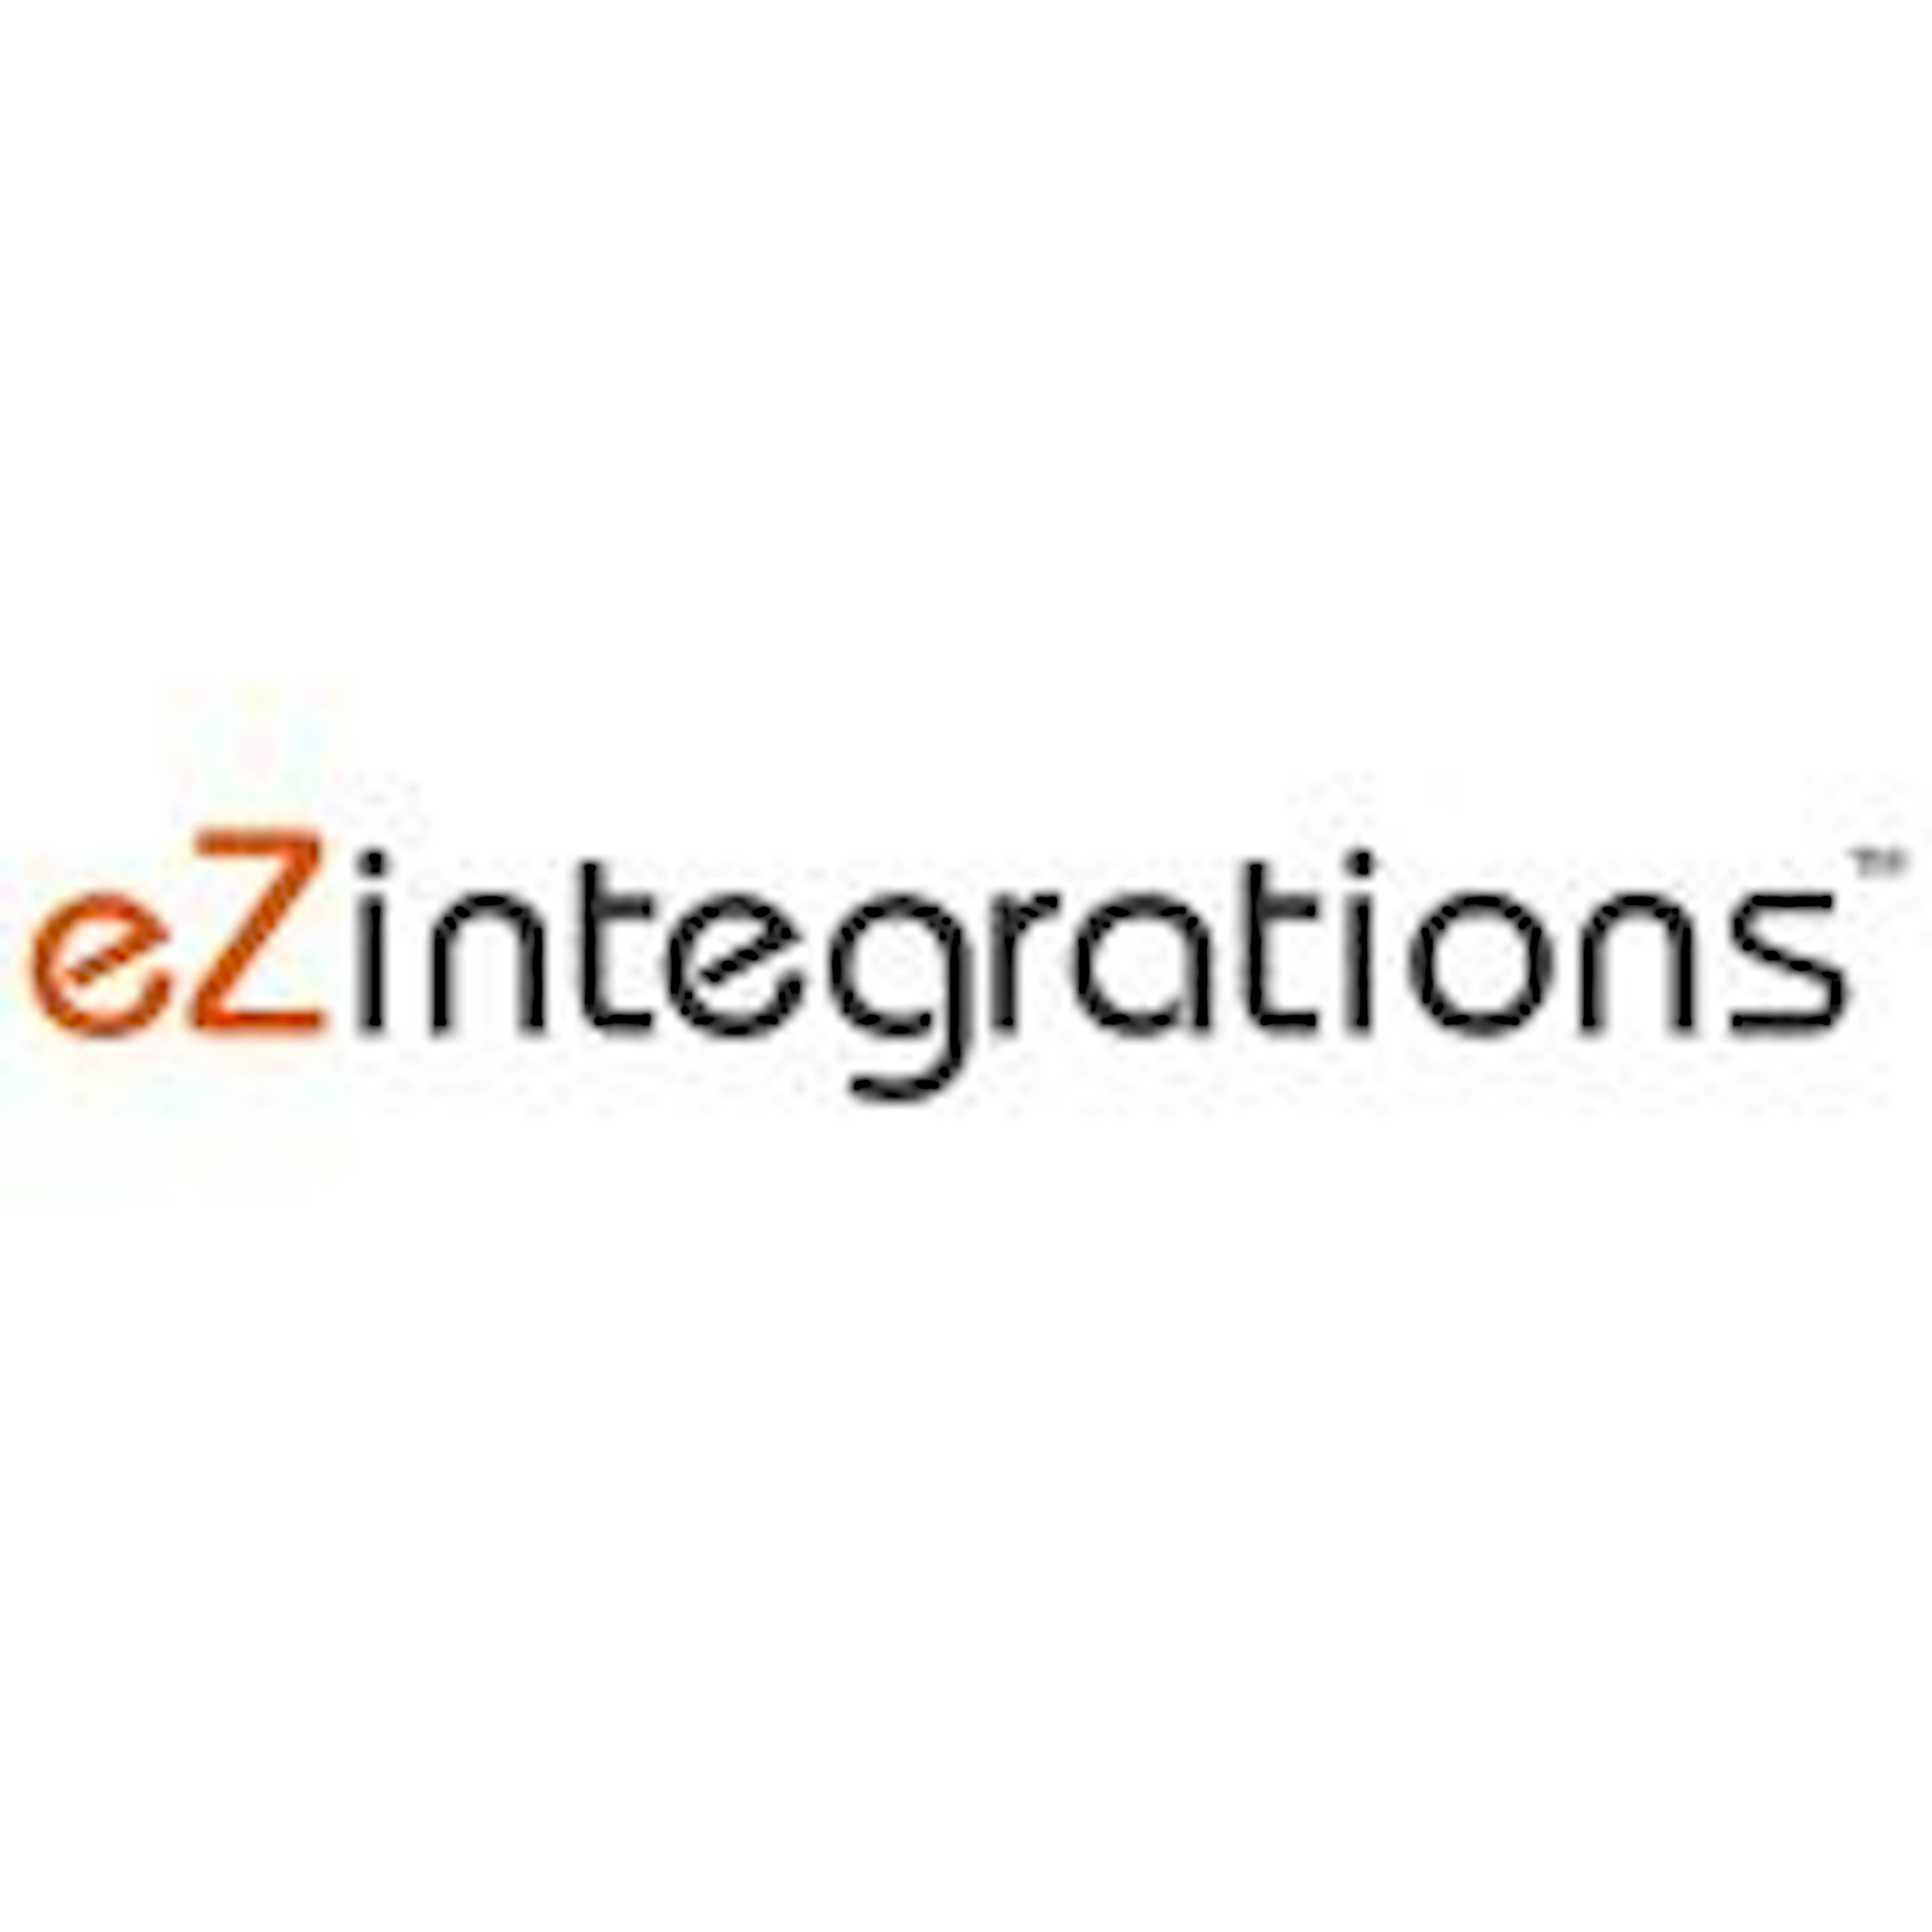 eZintegrations Logo